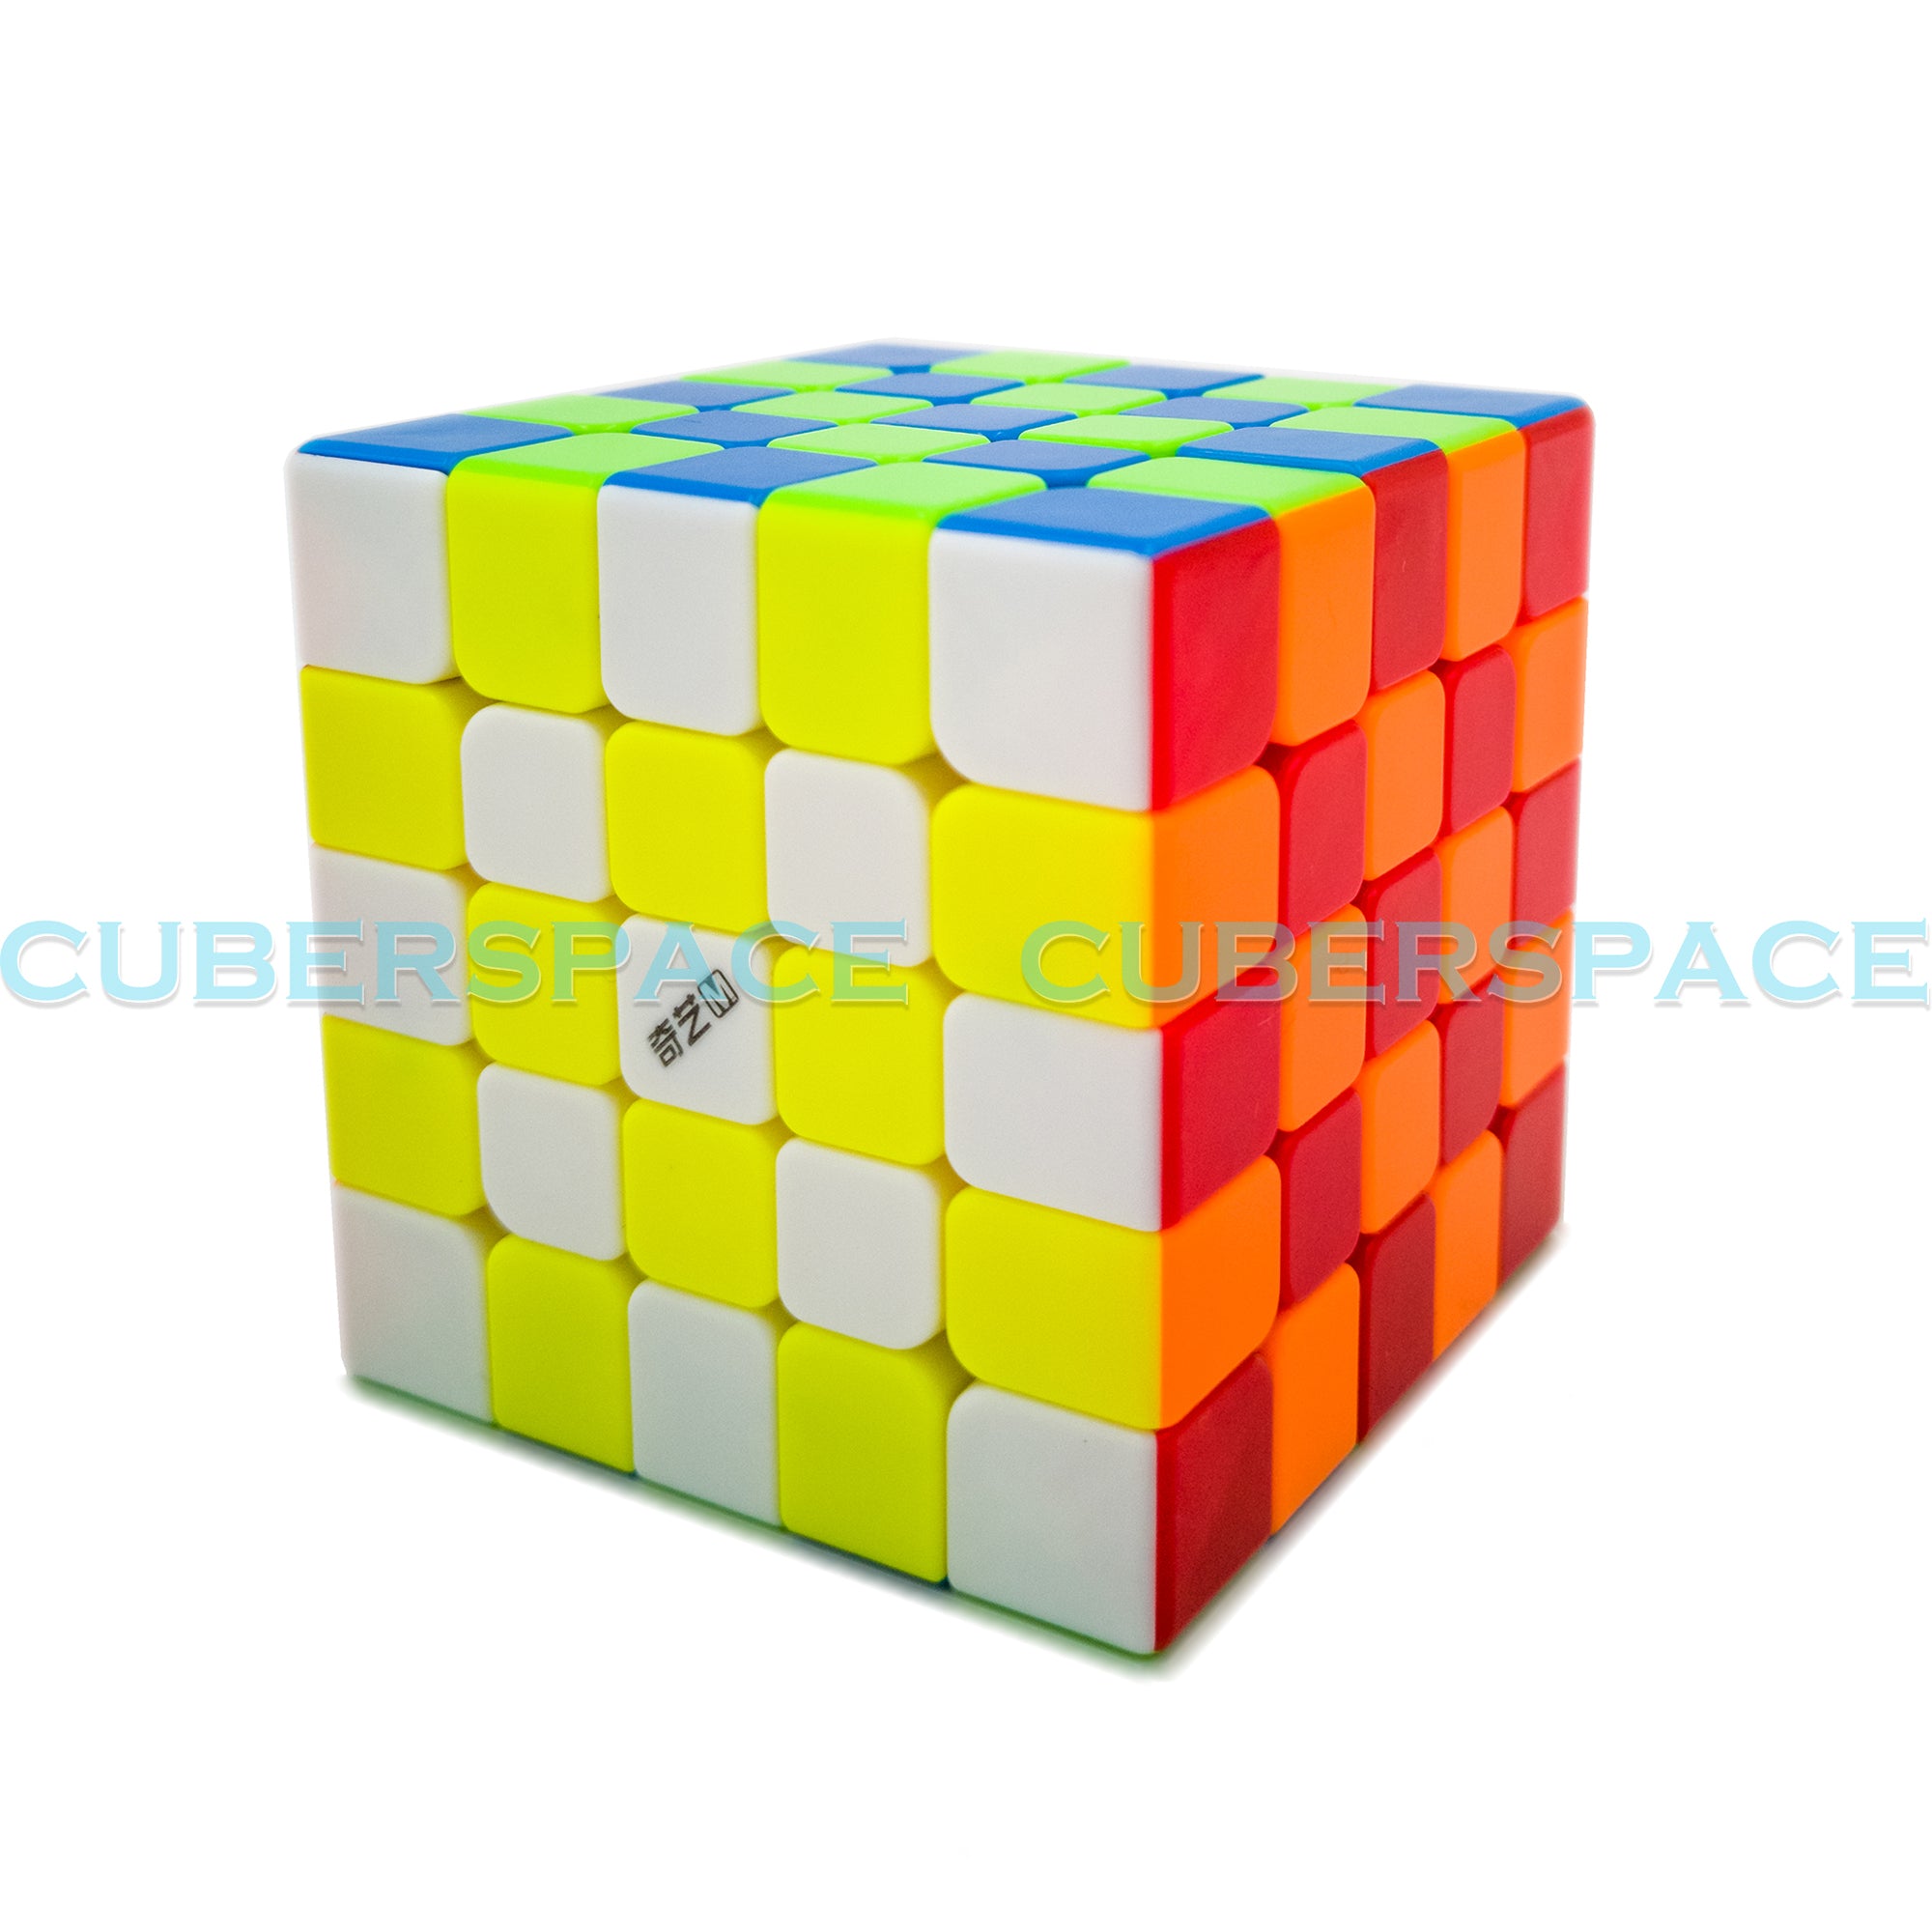 QiYi MS 5x5 - CuberSpace